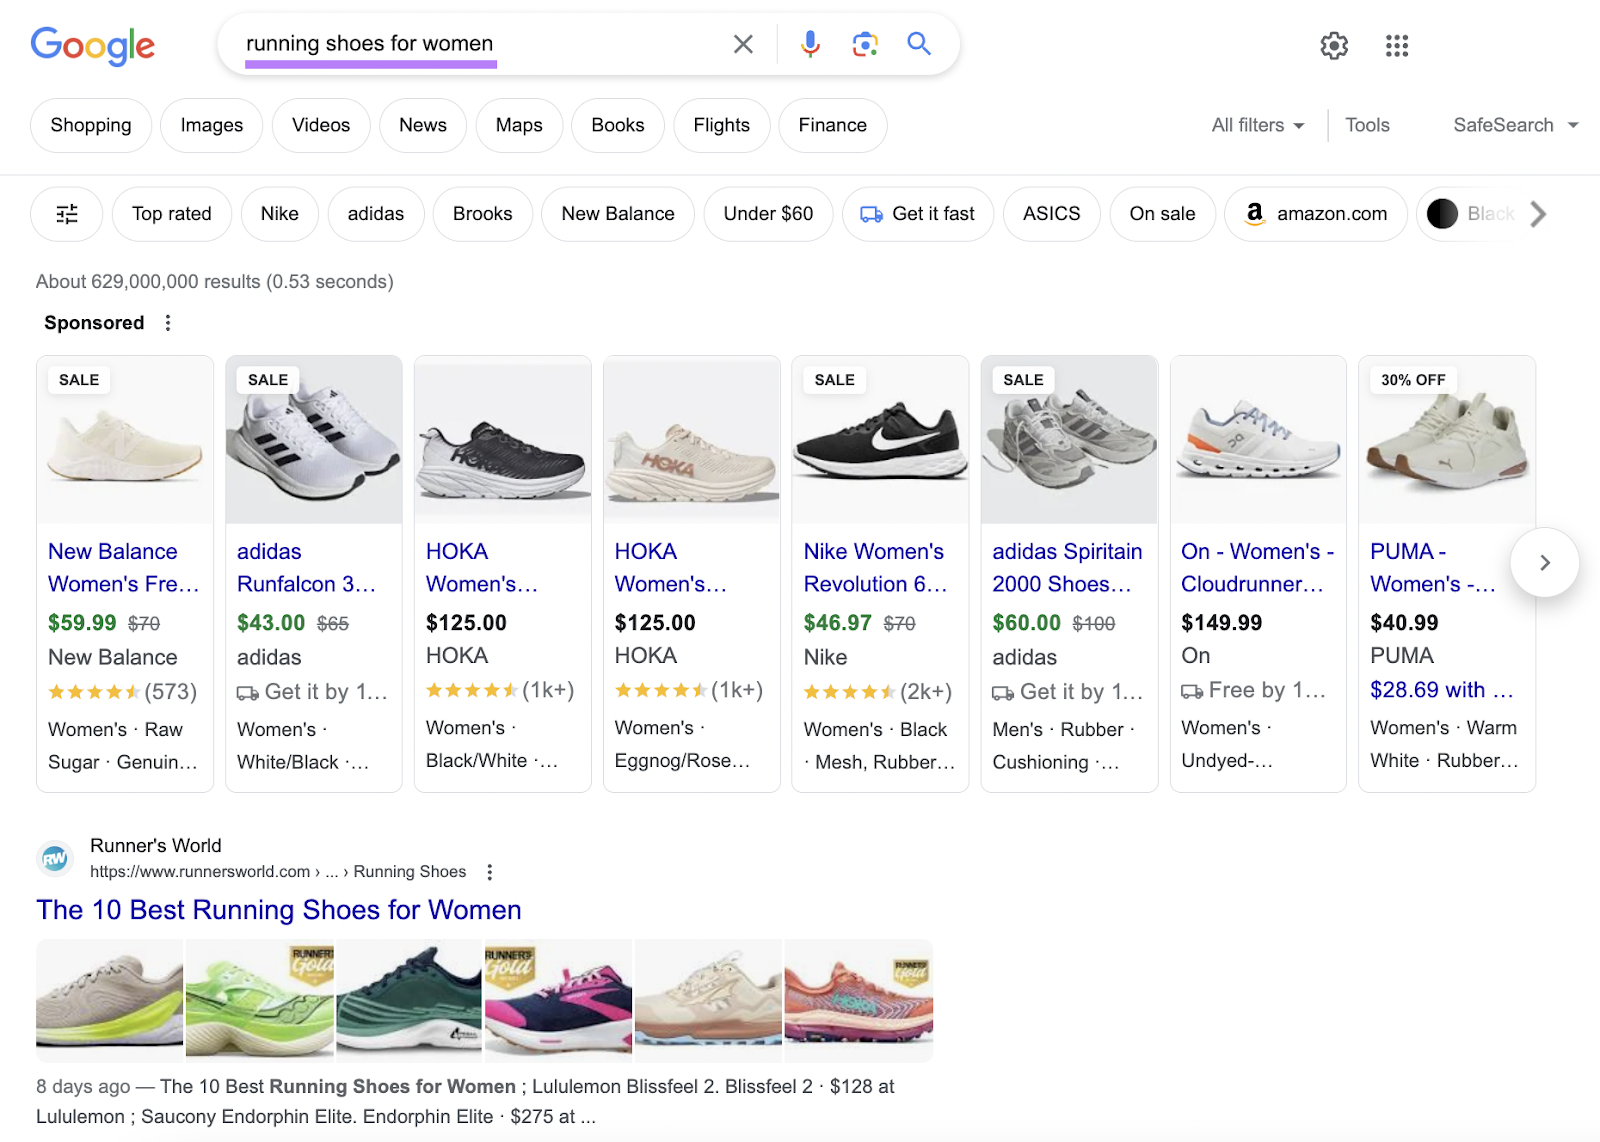 Google's SERP for "running shoes for women"